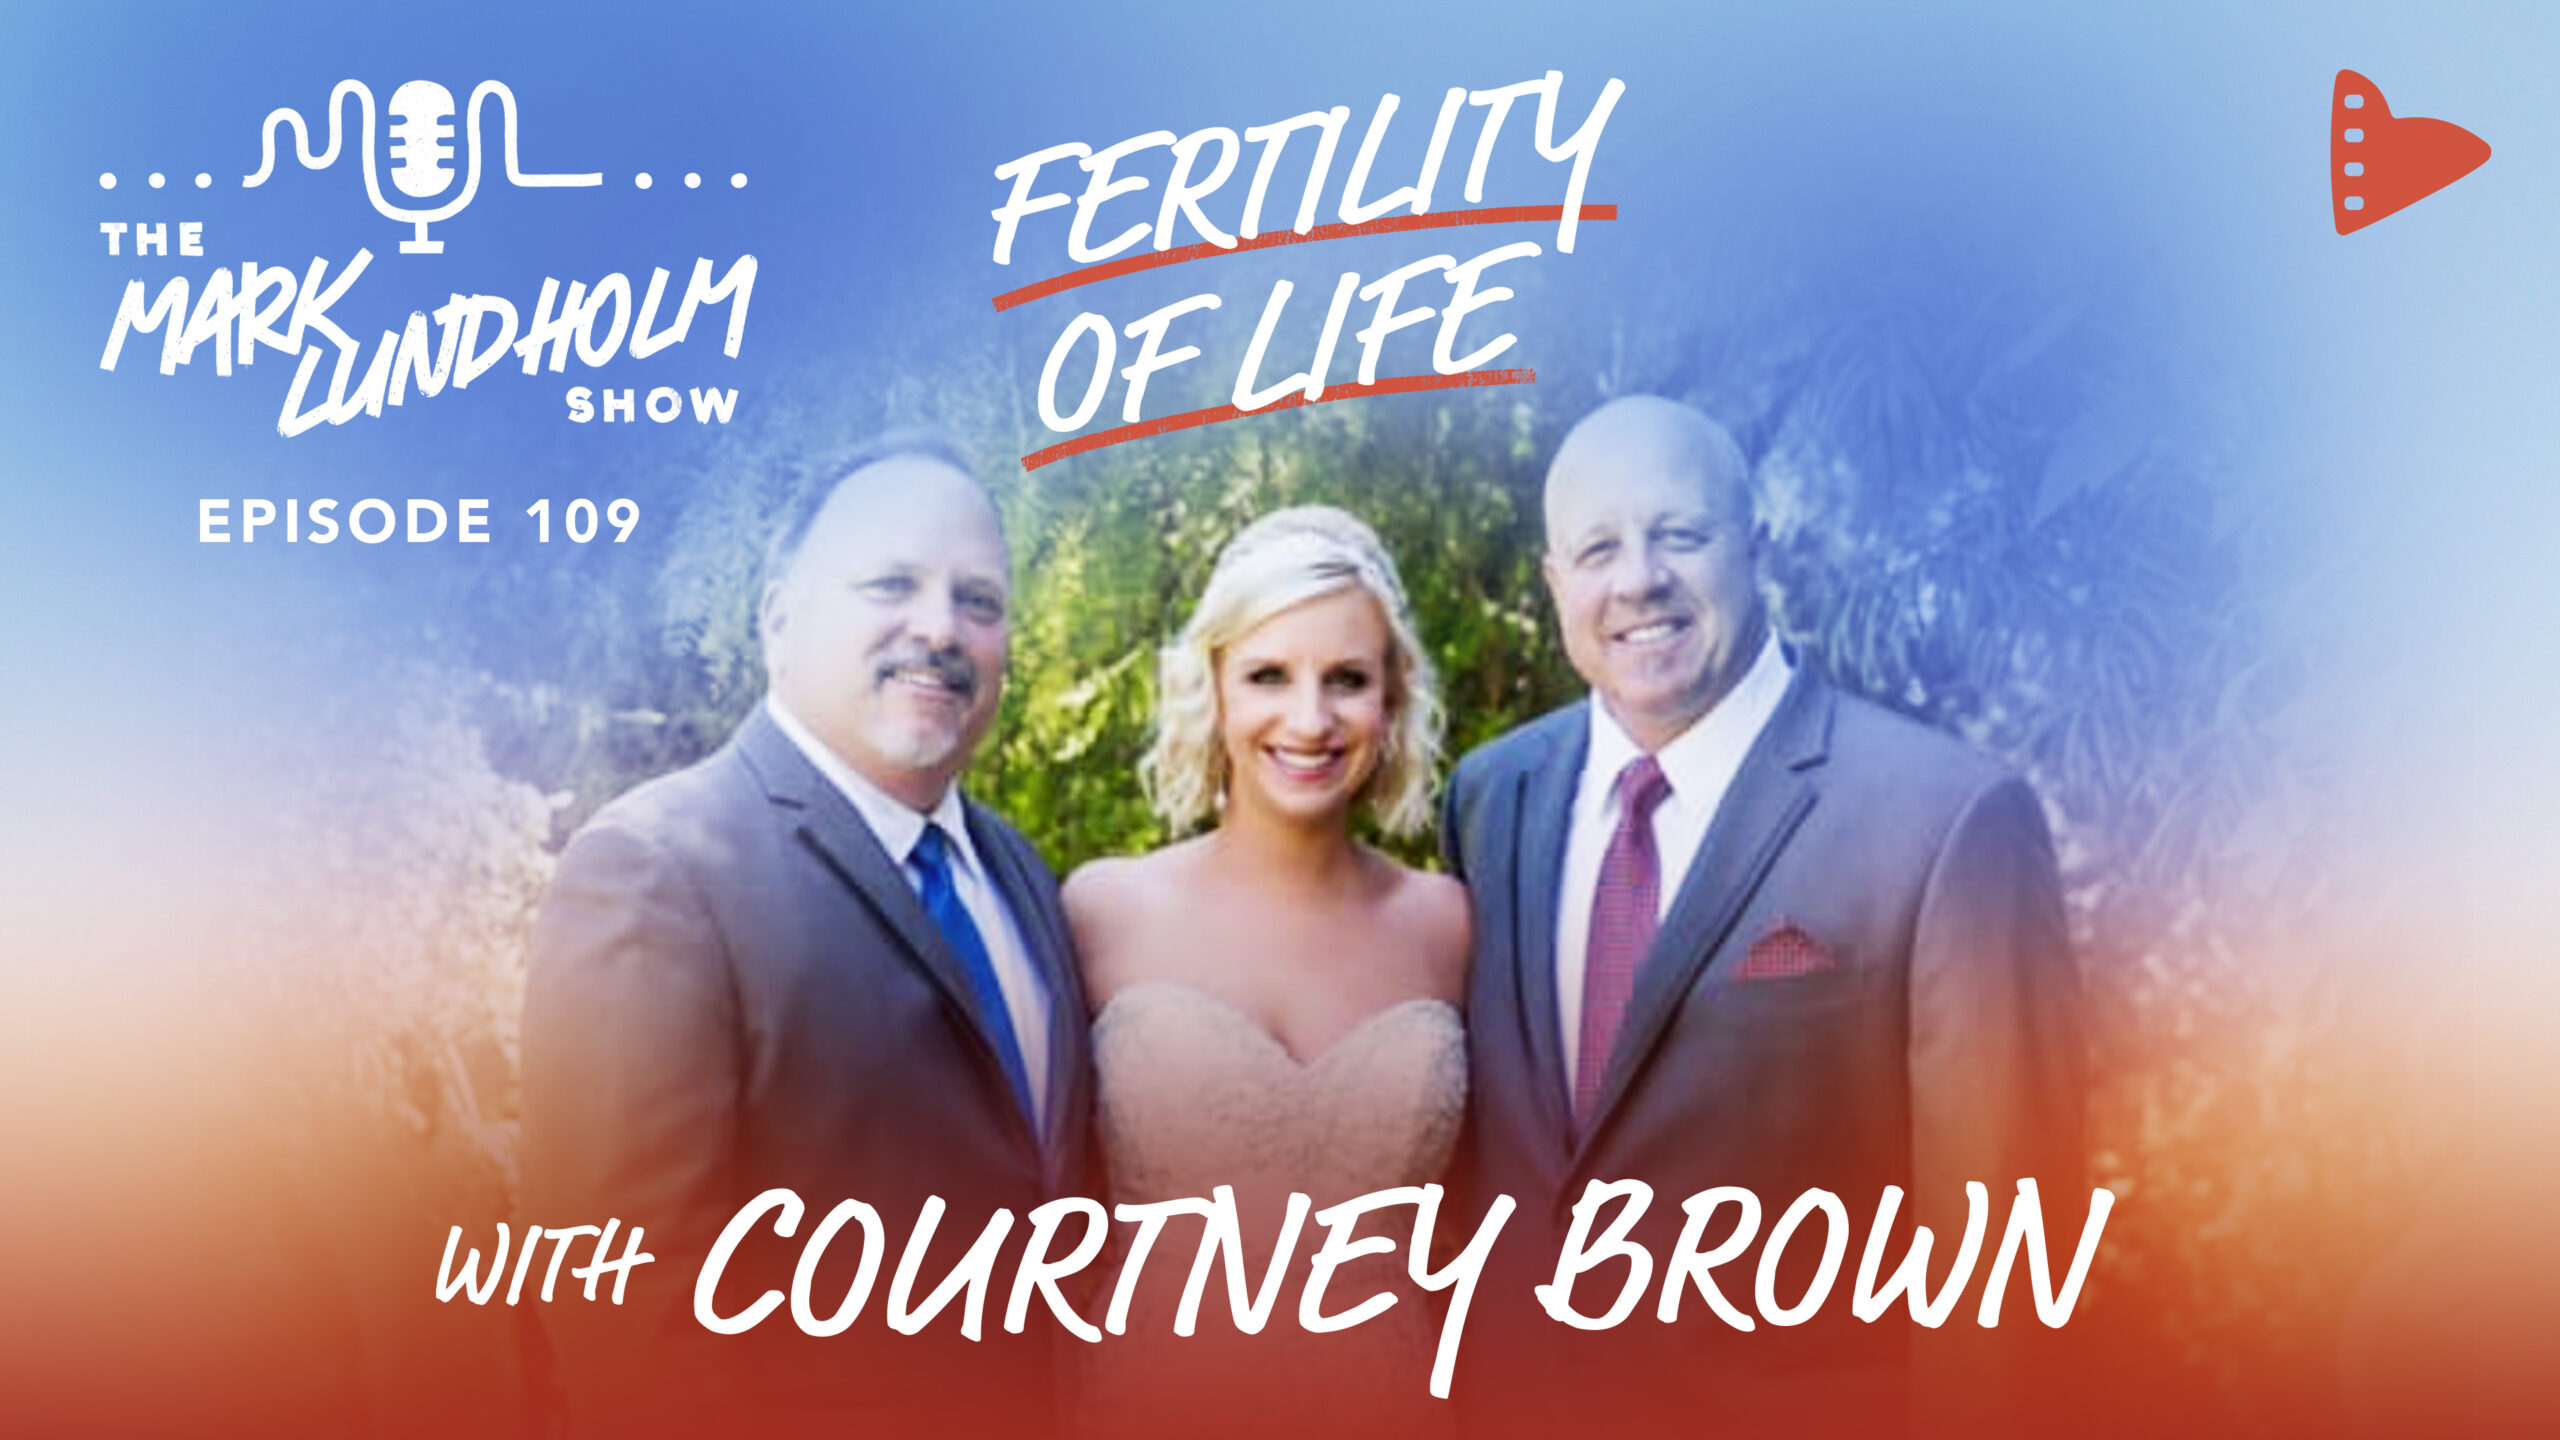 Episode 109: Fertility of Life